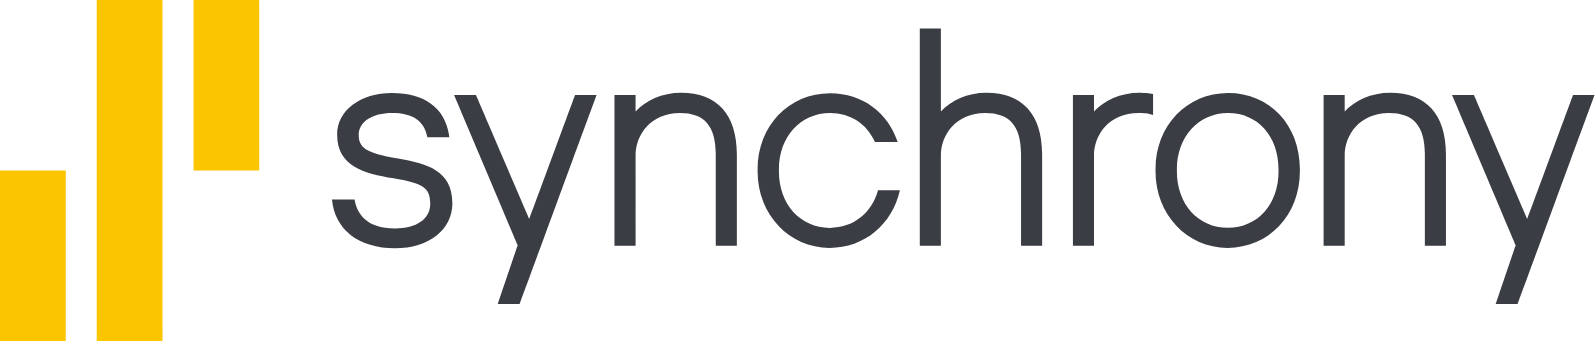 Synchrony logo large (transparent PNG)